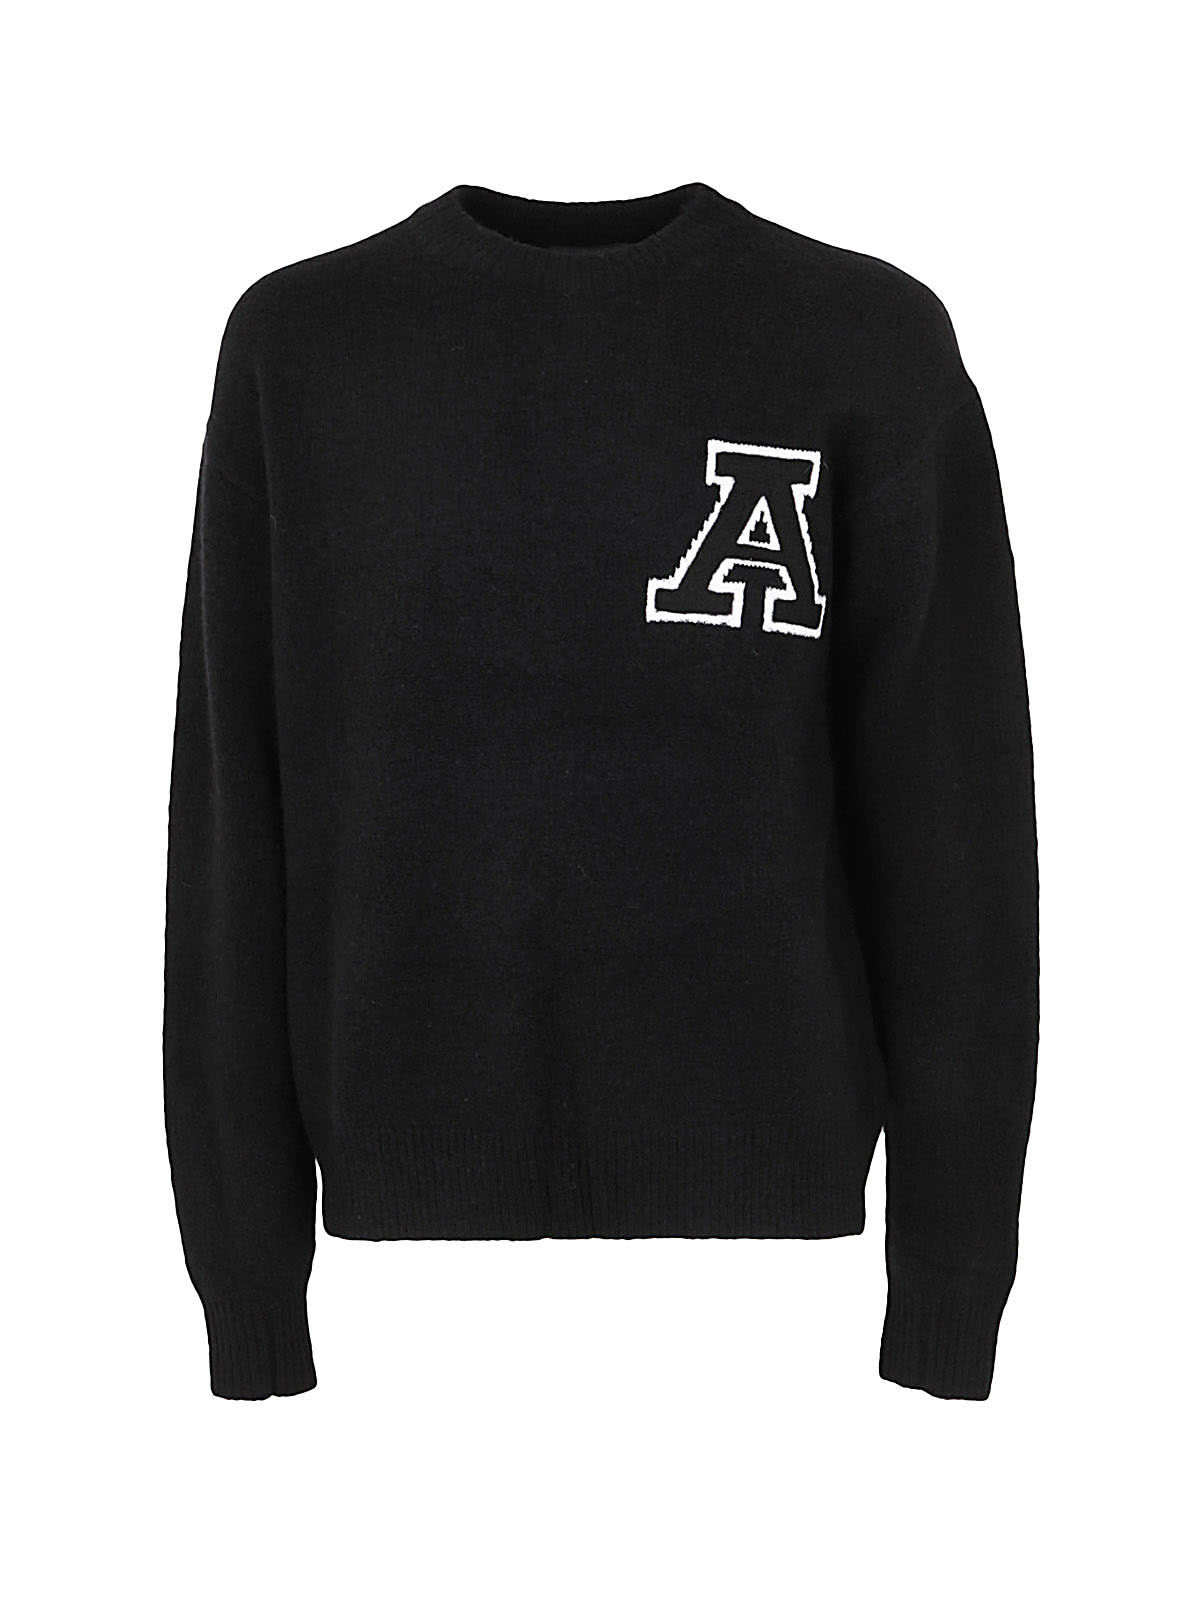 Axel Arigato Team Sweater